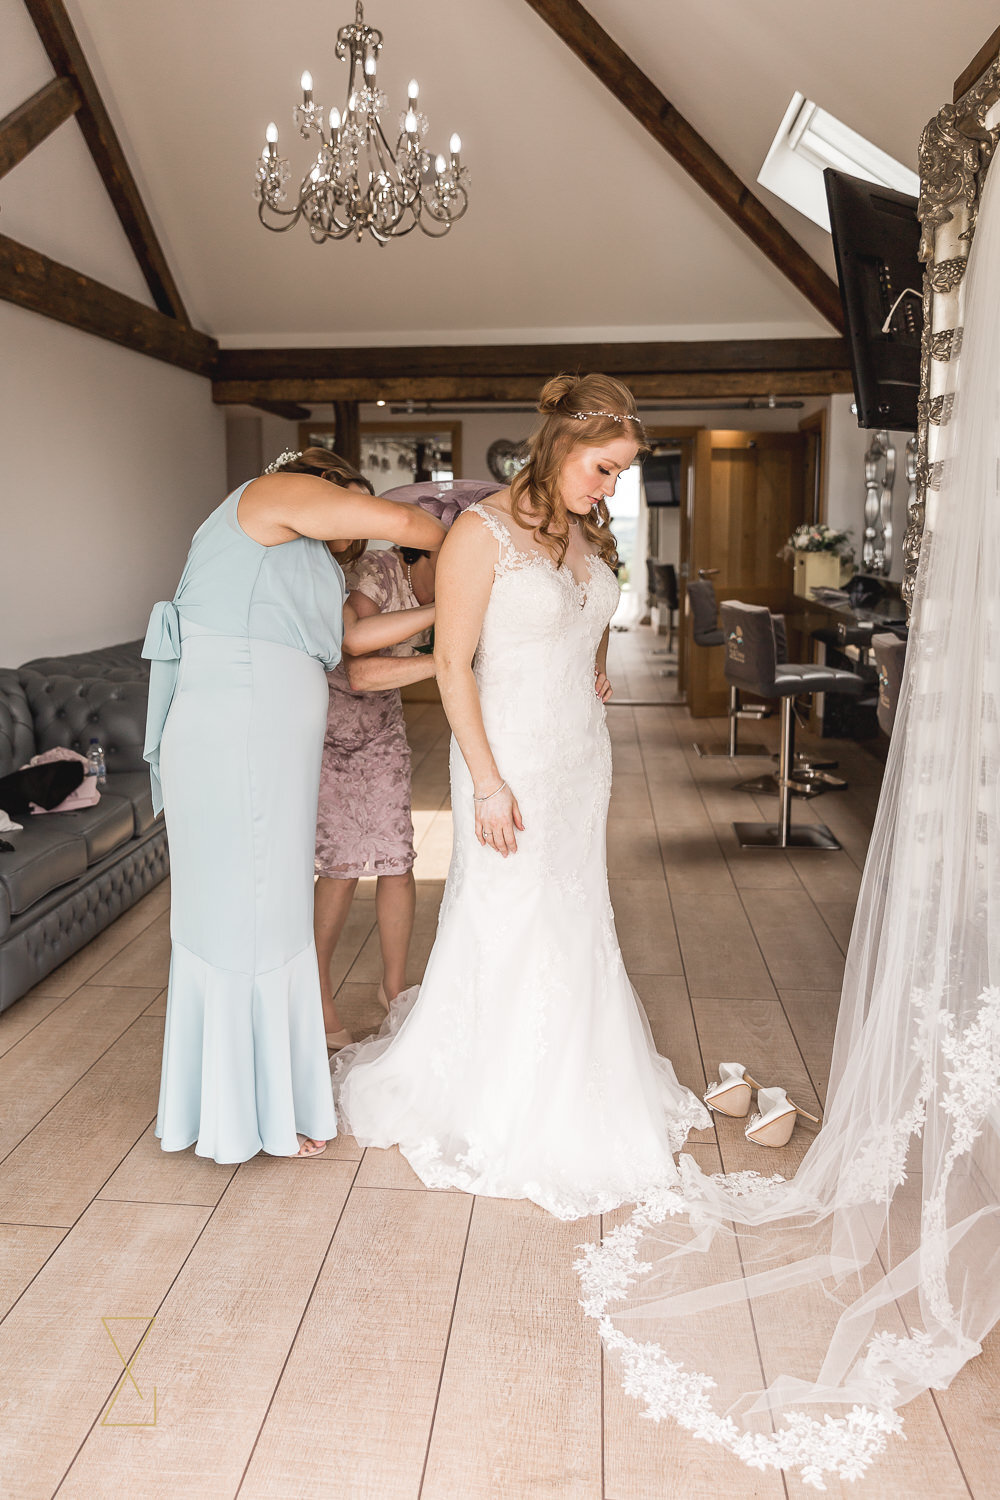 Bride-getting-into-wedding-dress-Cheshire-wedding